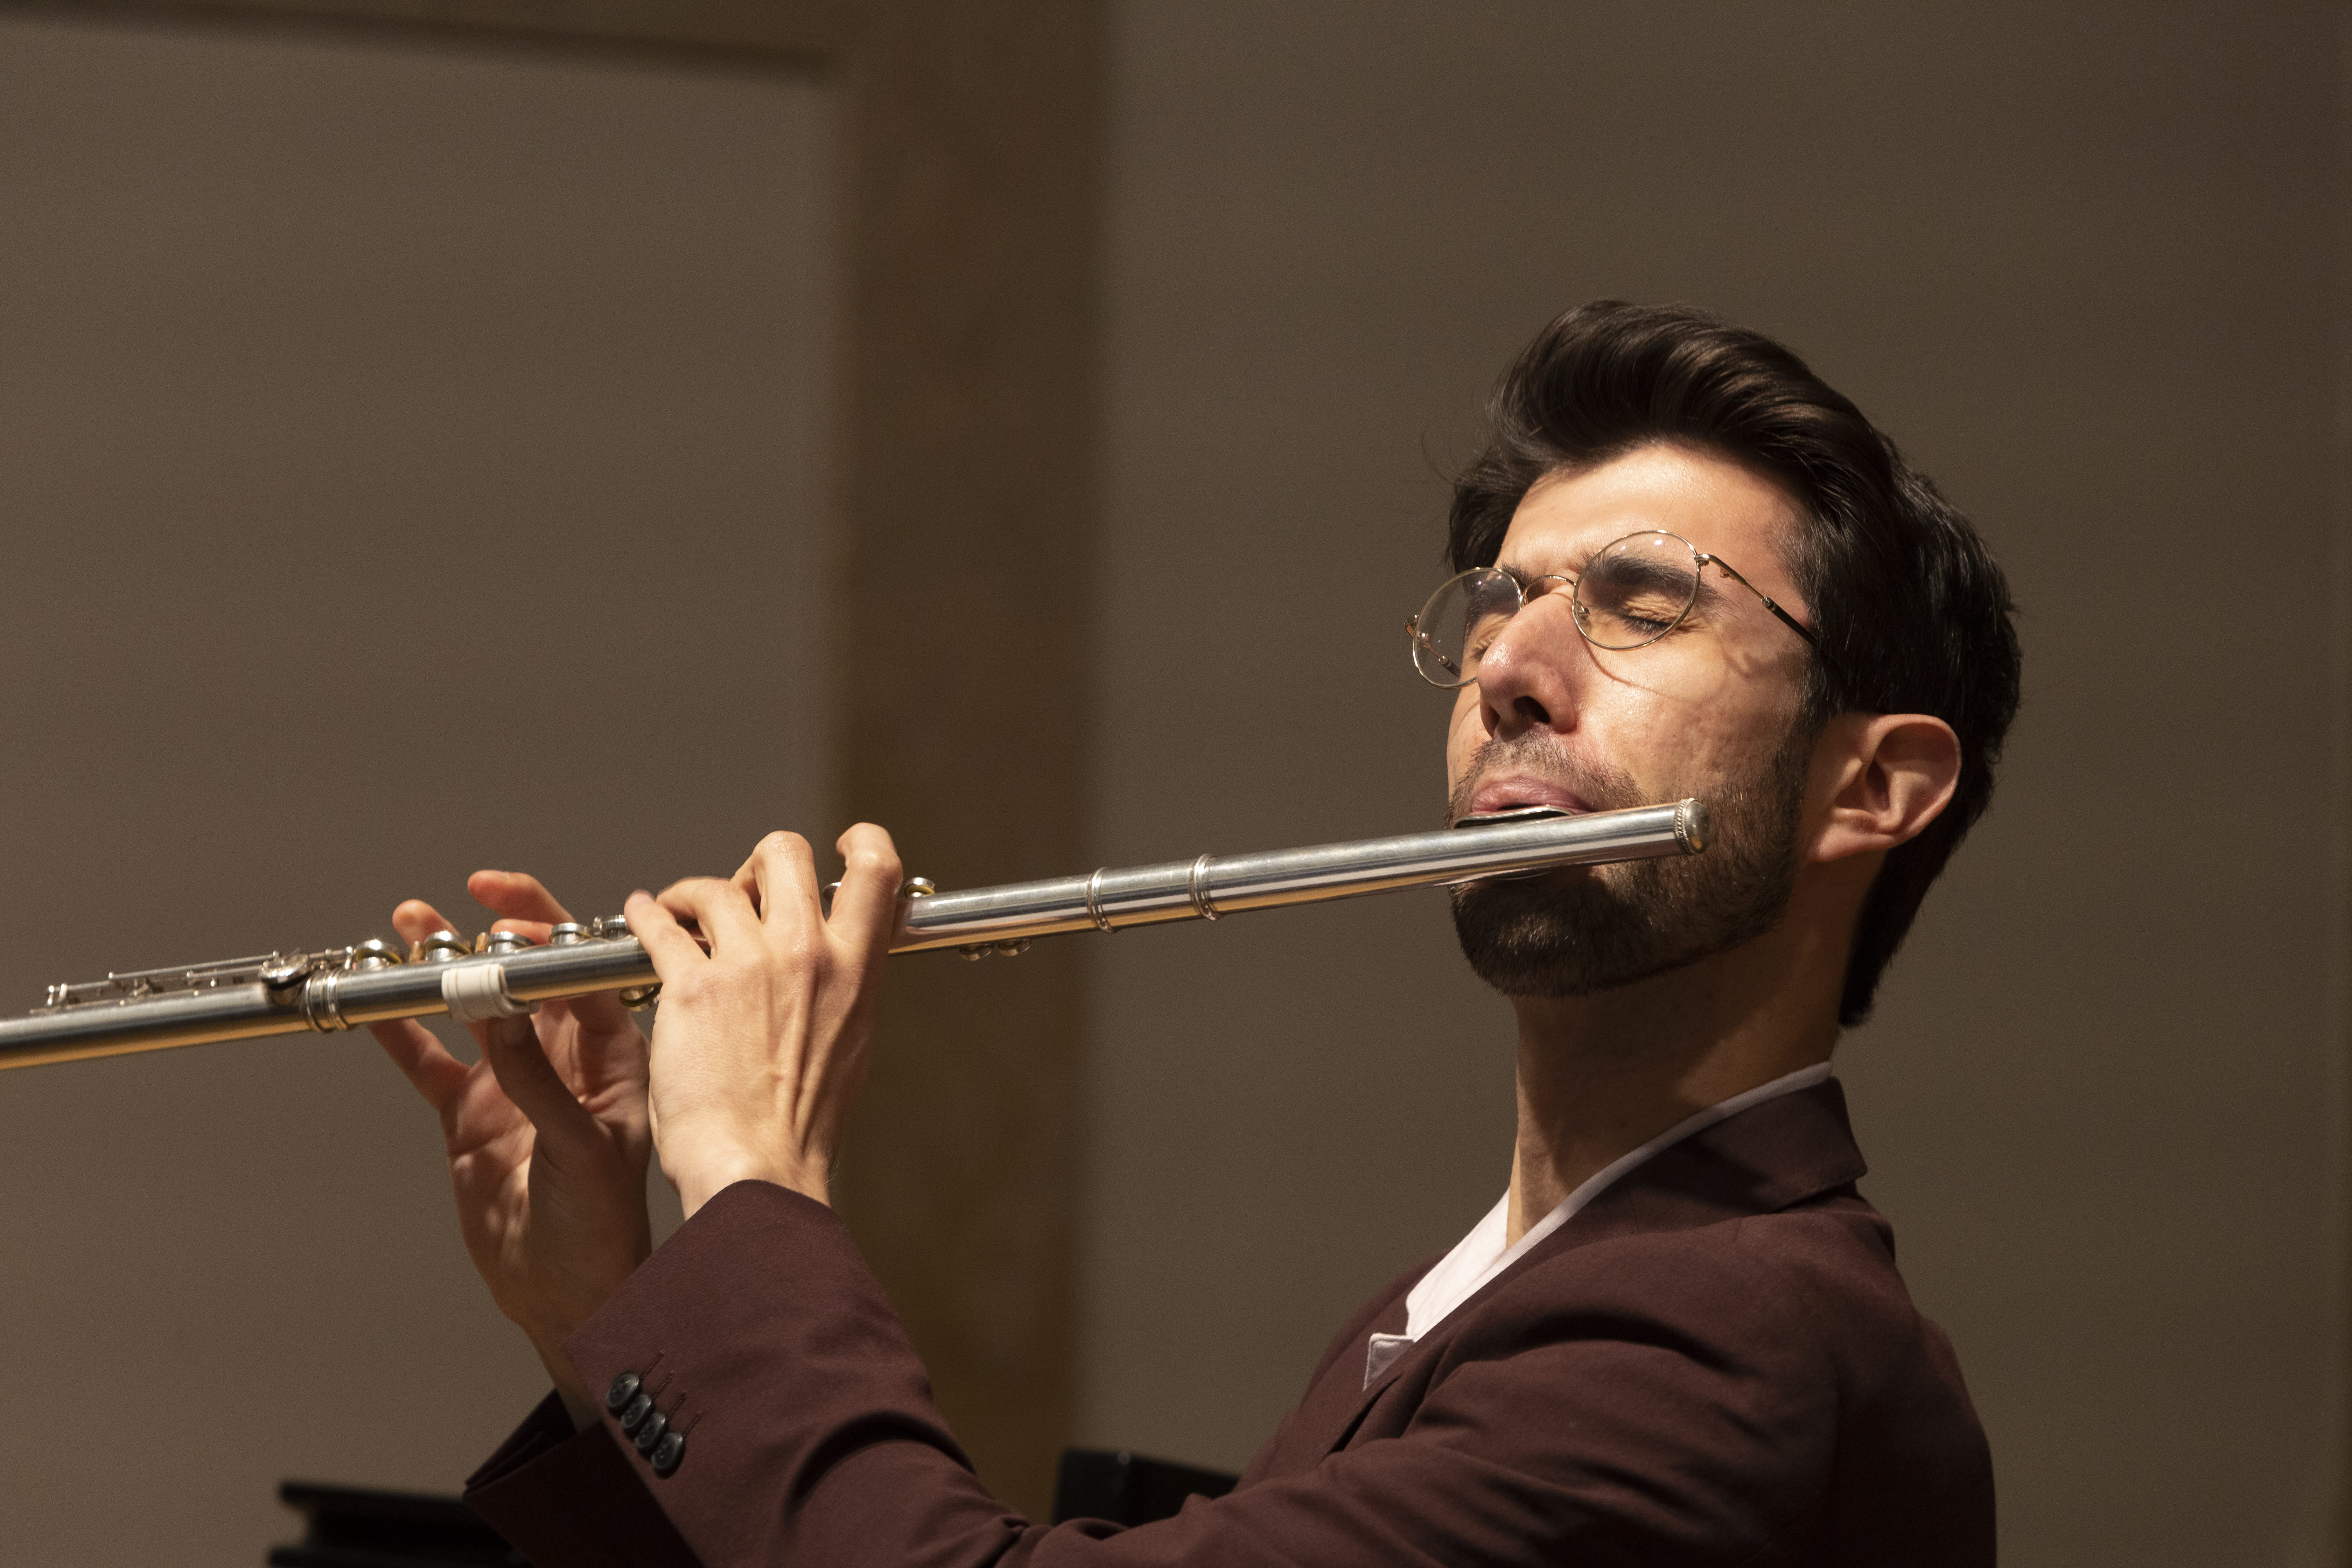 david silva playing a flute